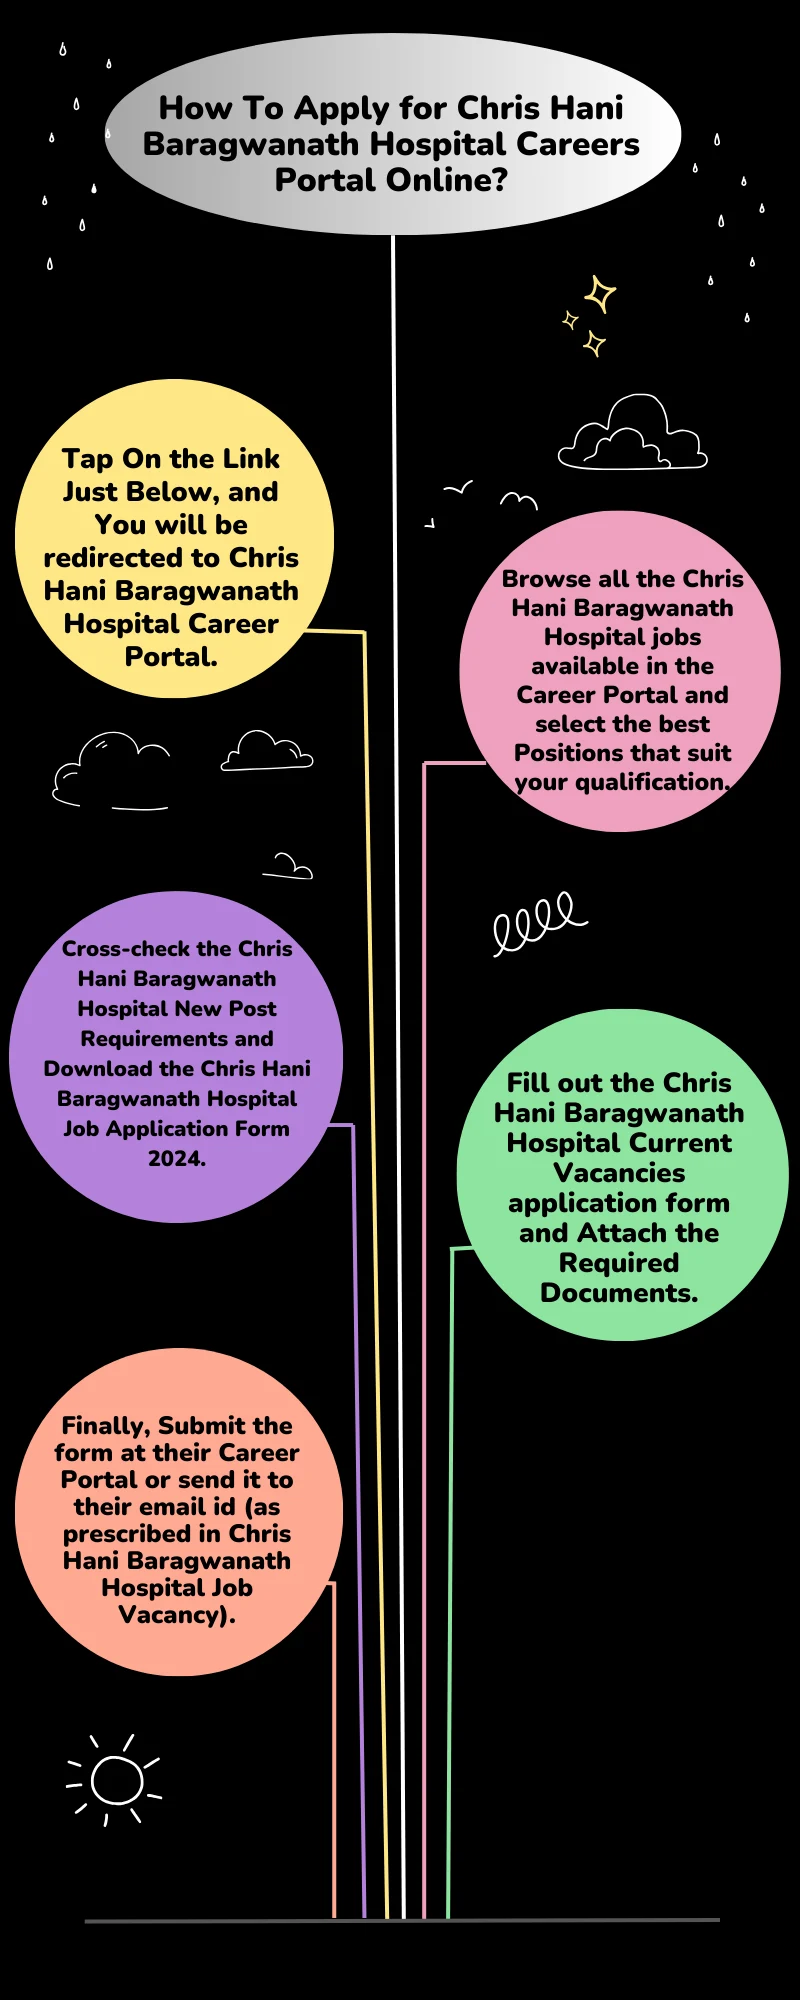 How To Apply for Chris Hani Baragwanath Hospital Careers Portal Online?